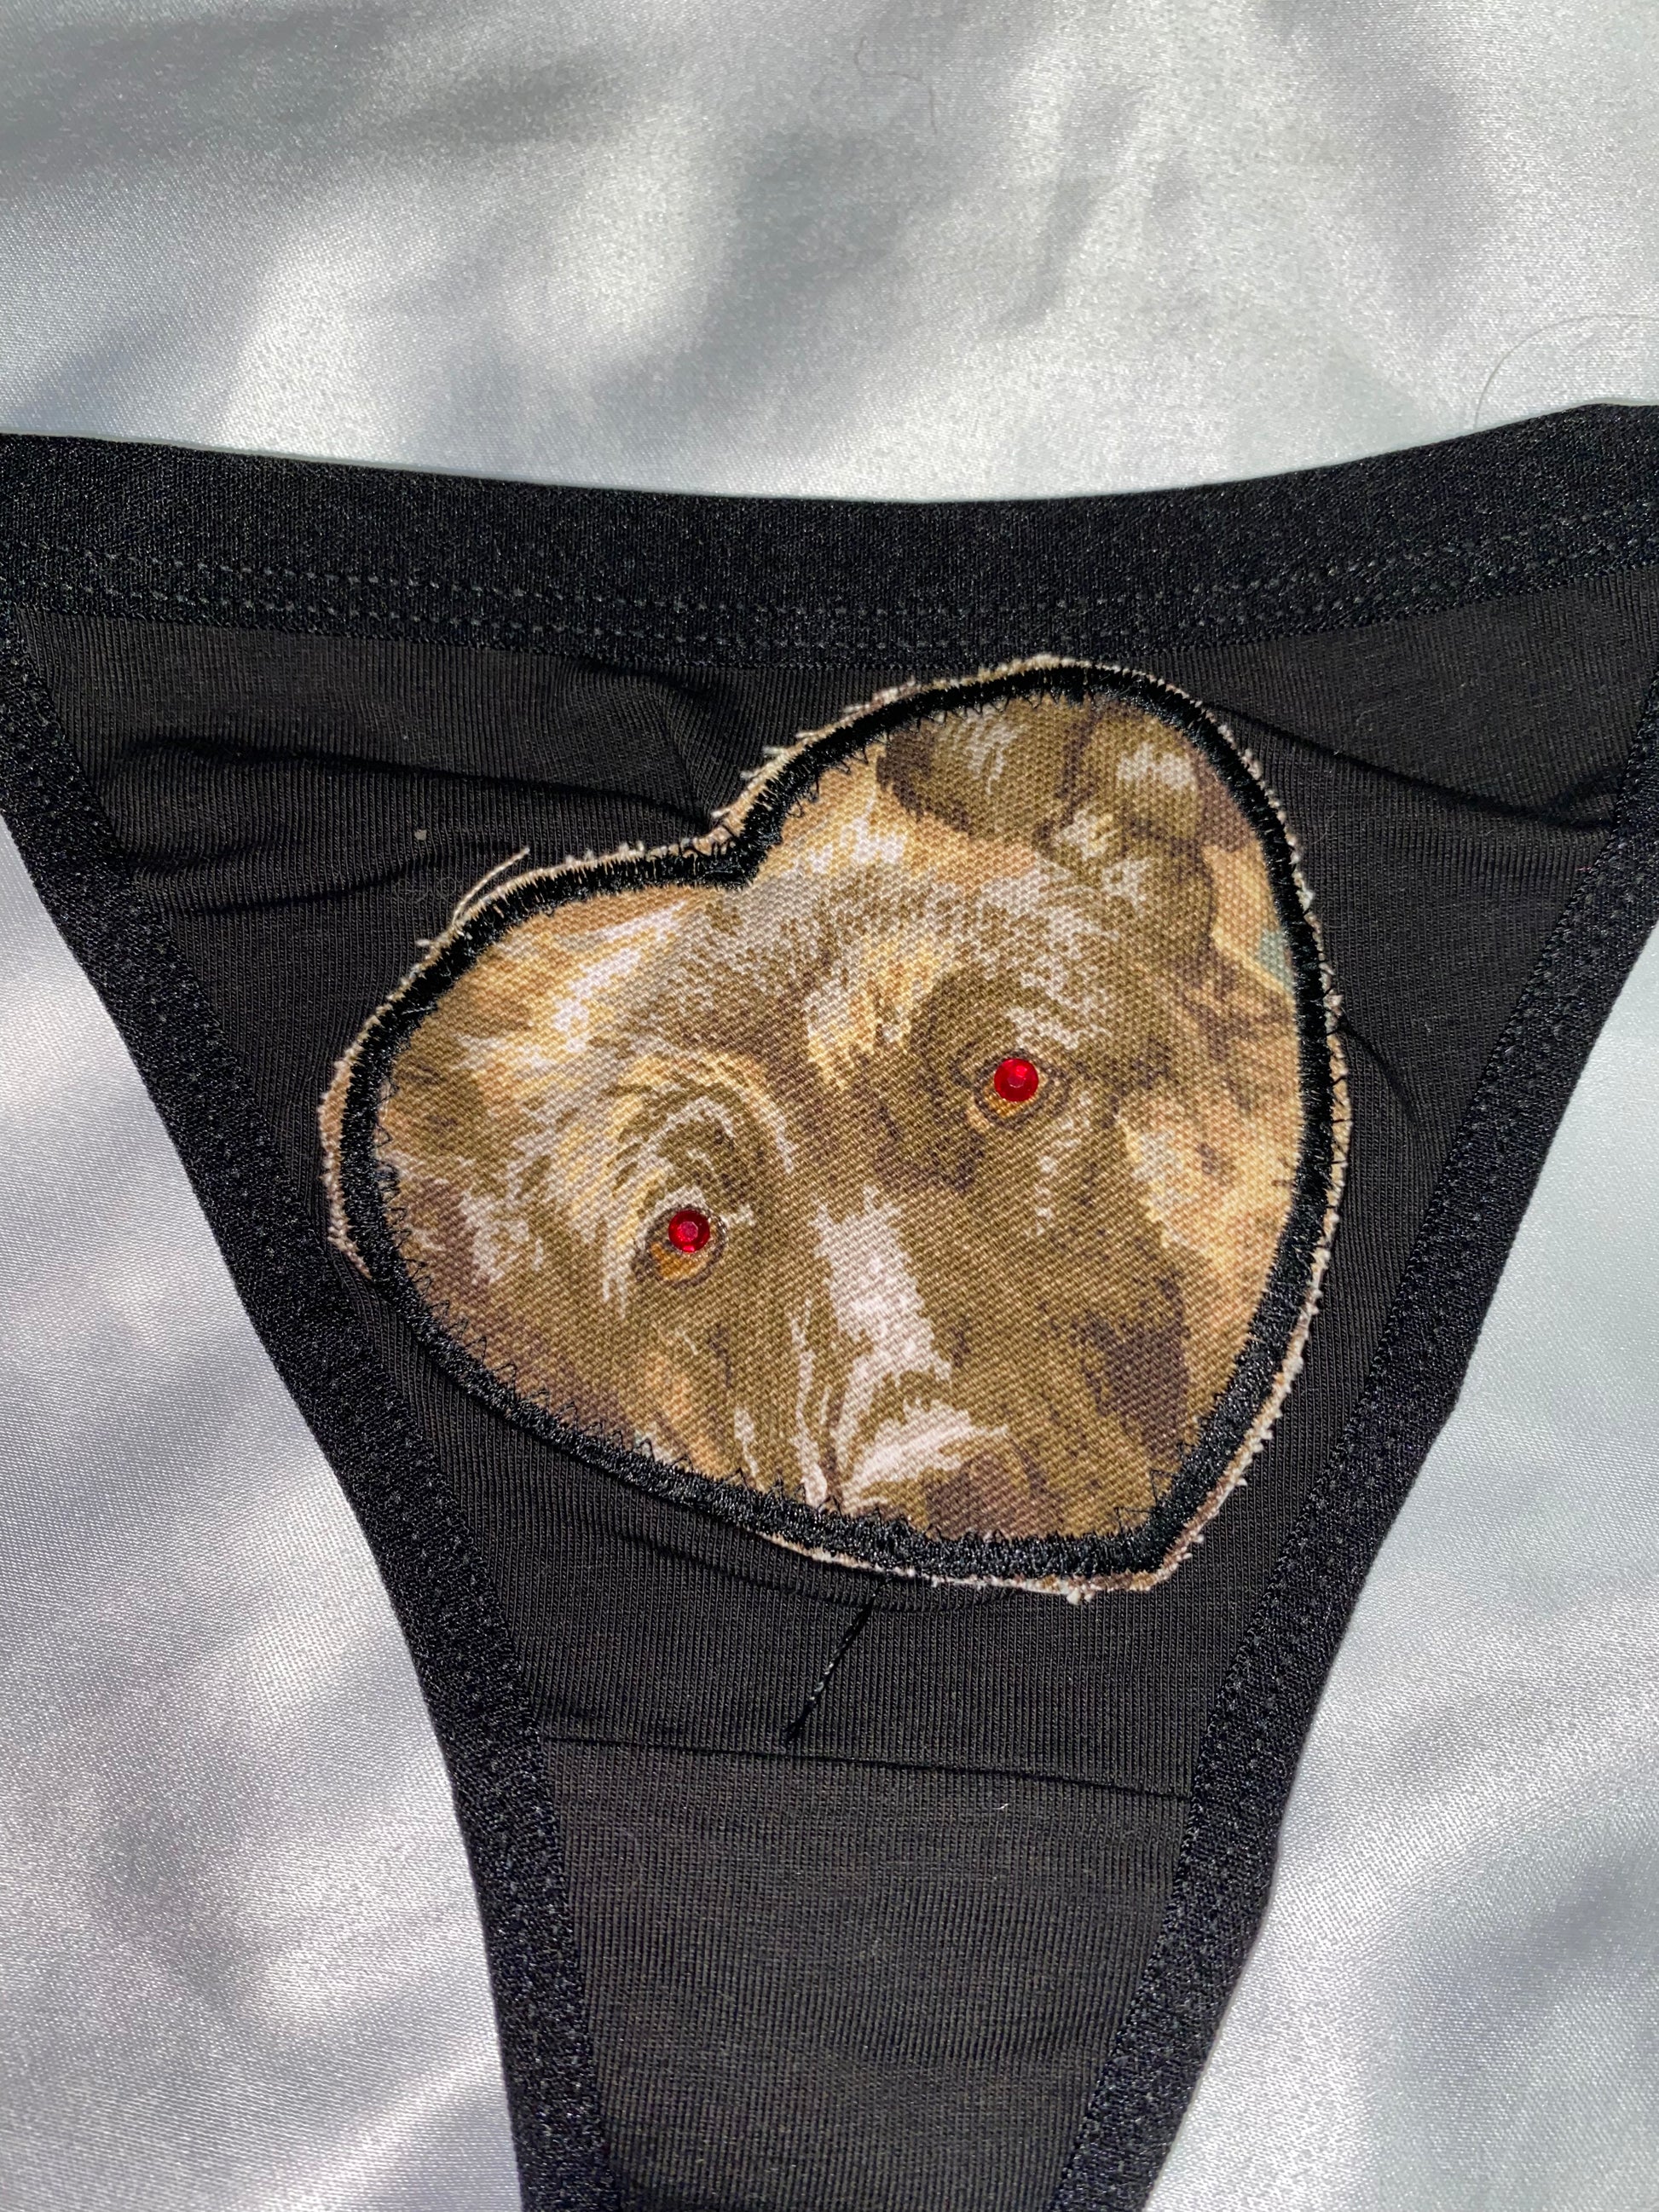 Grizzly Bear Underwear